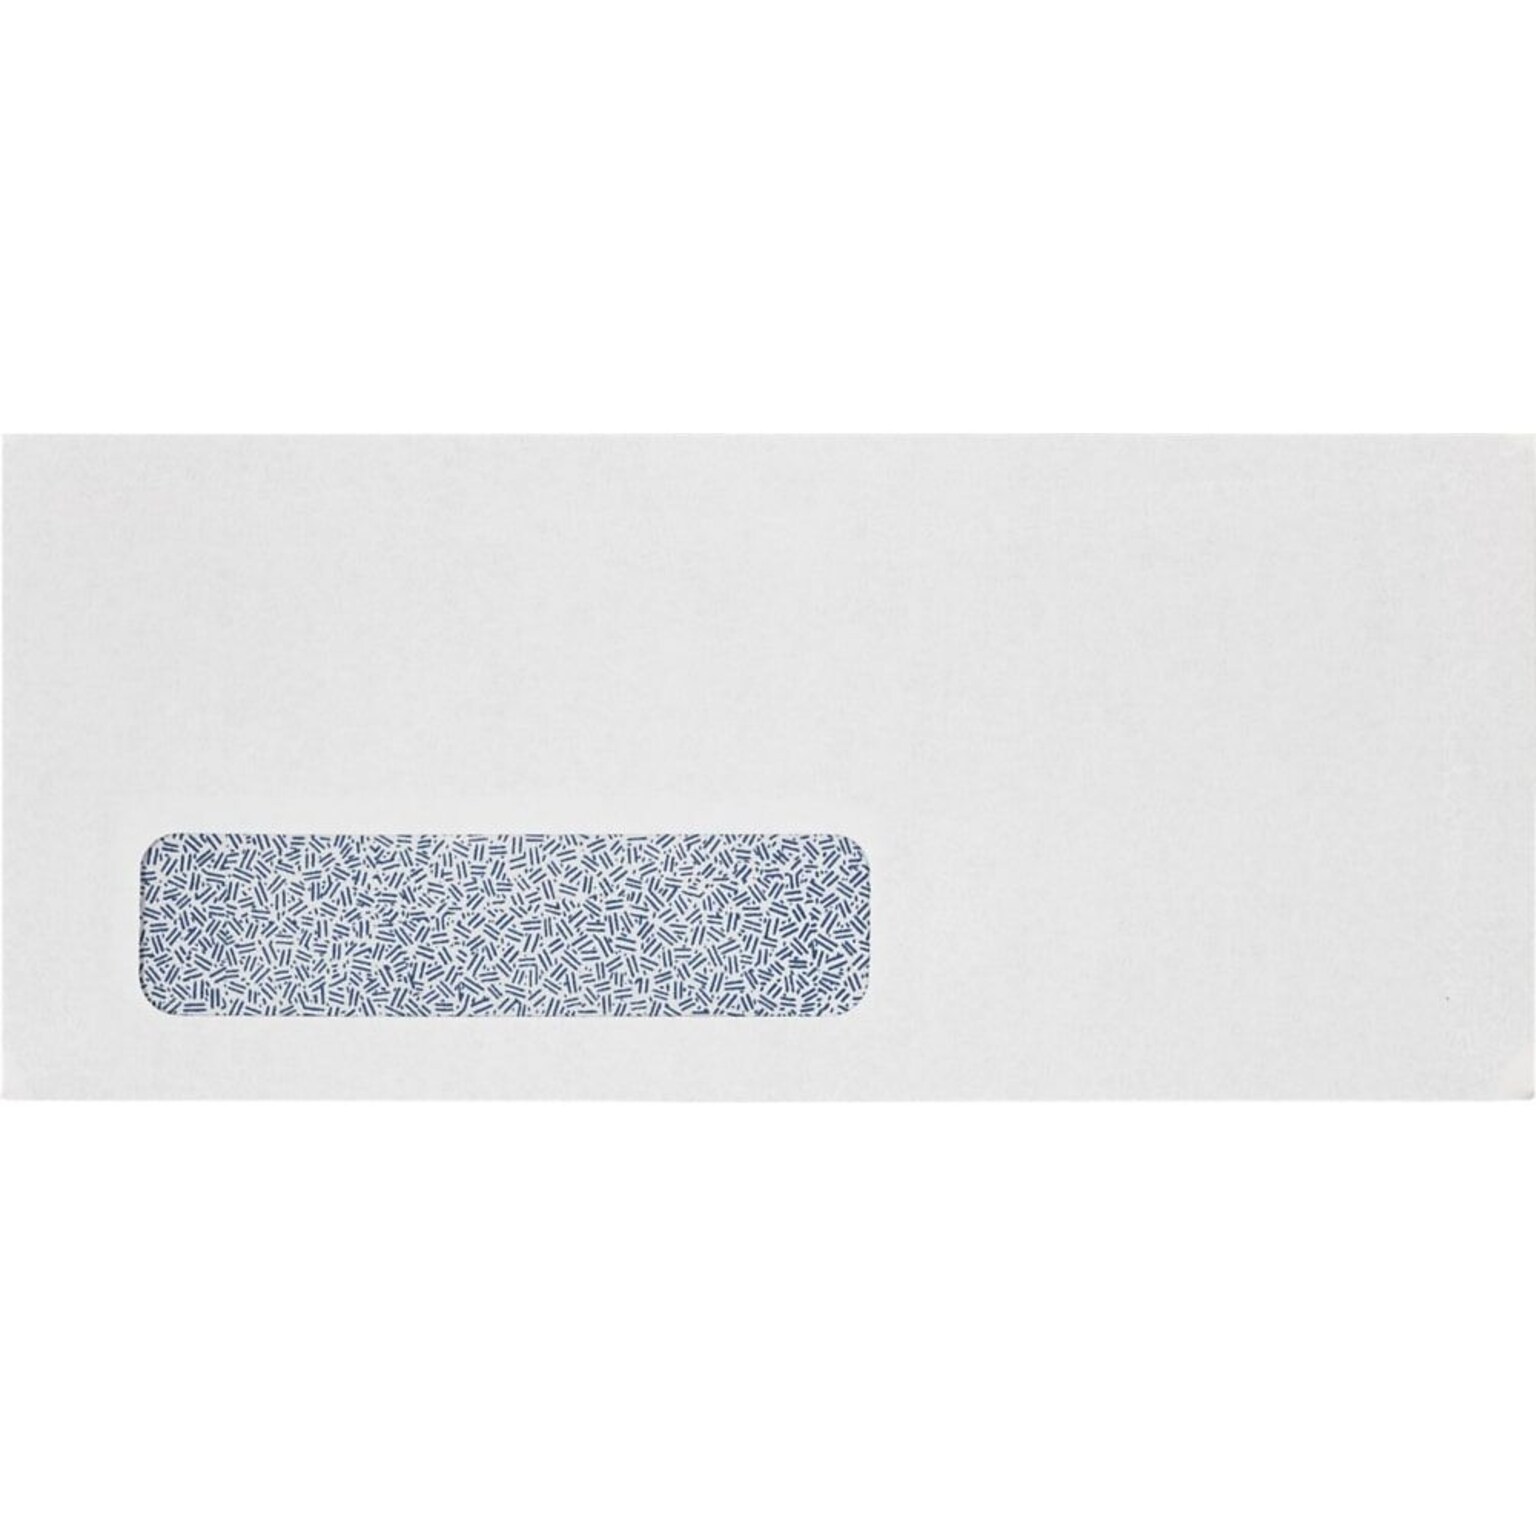 JAM PAPER #10 Window Envelopes 4 1/8 x 9 1/2, 24lb., Bright White, Security Tint, Laser Safe, 1000/Pack (92021-1M)